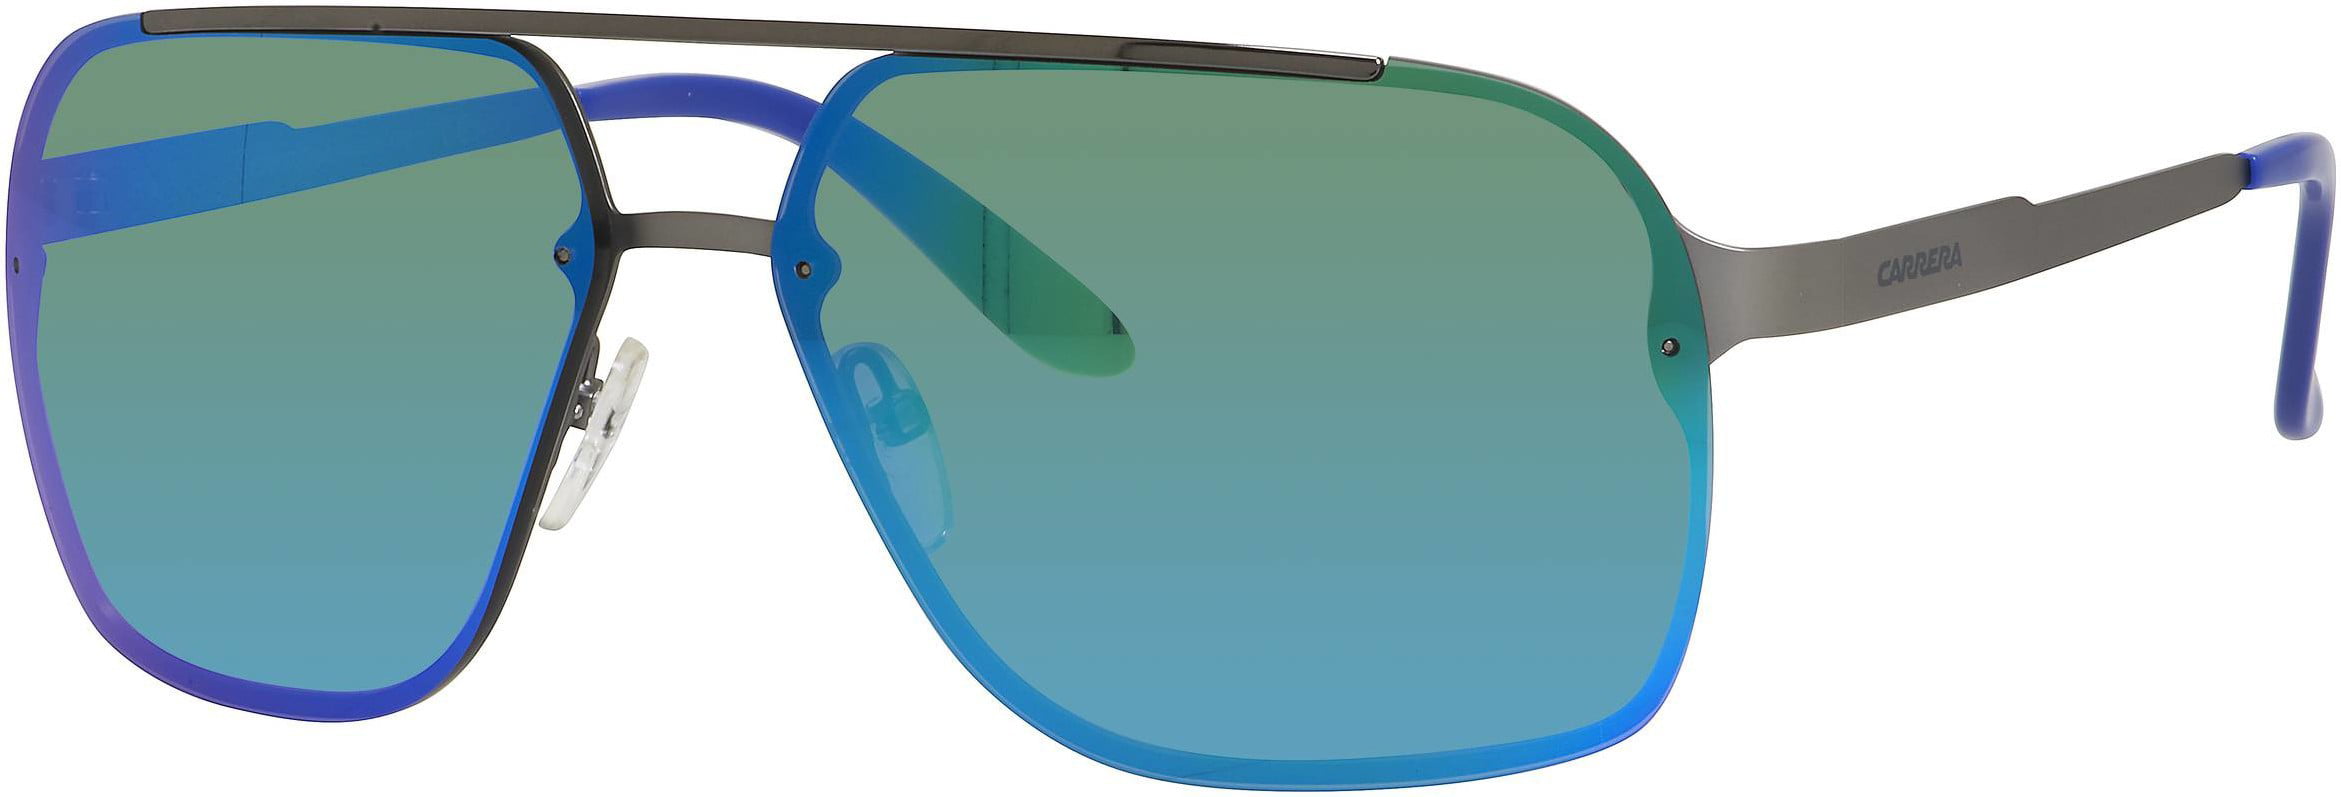 New Men Womens Retro Sunglasses Unisex Sport Matte Frame Carrera Glasses C-1 